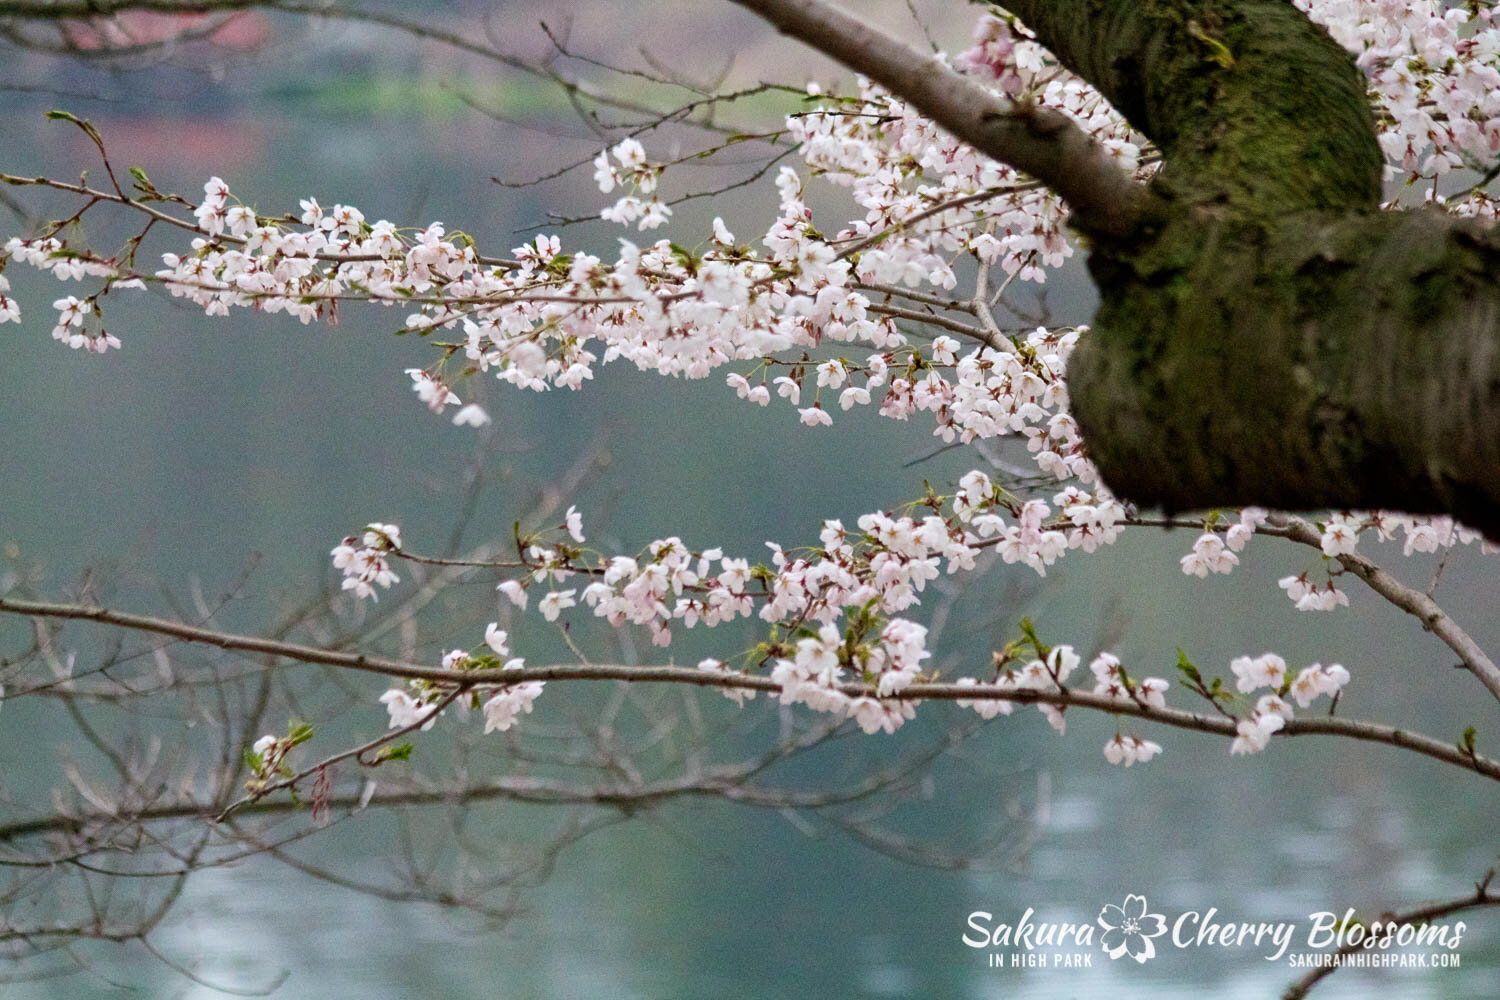  Sakura // Cherry Blossoms in High Park - April 15, 2012 - www.SakurainHighPark.com 